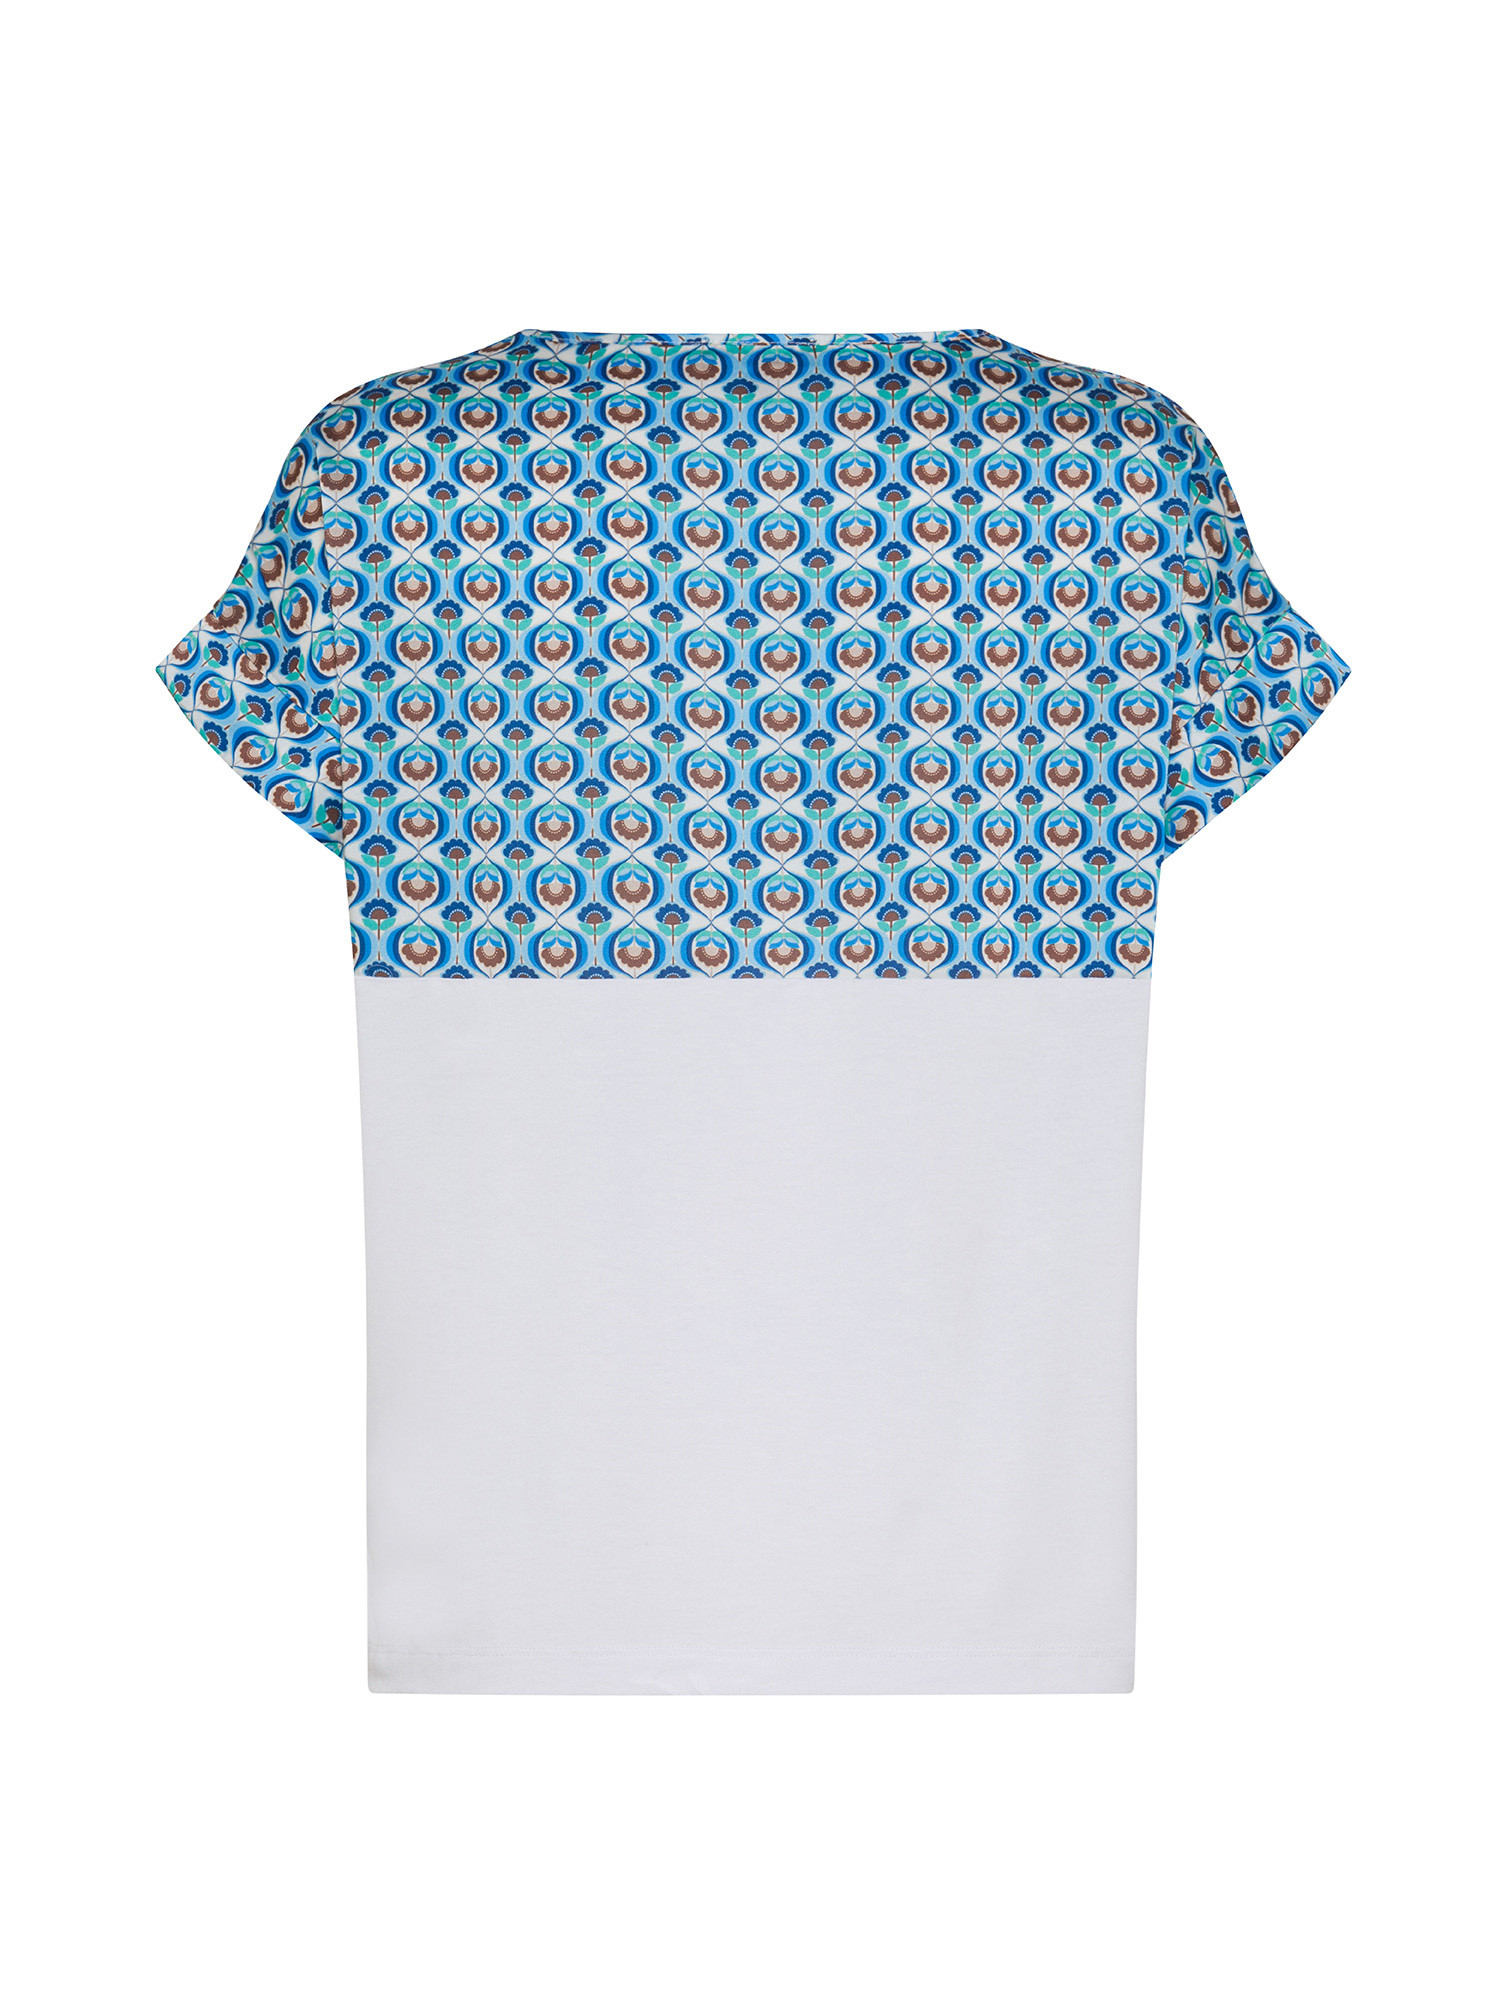 Koan - T-shirt con micro fantasia, Azzurro, large image number 1